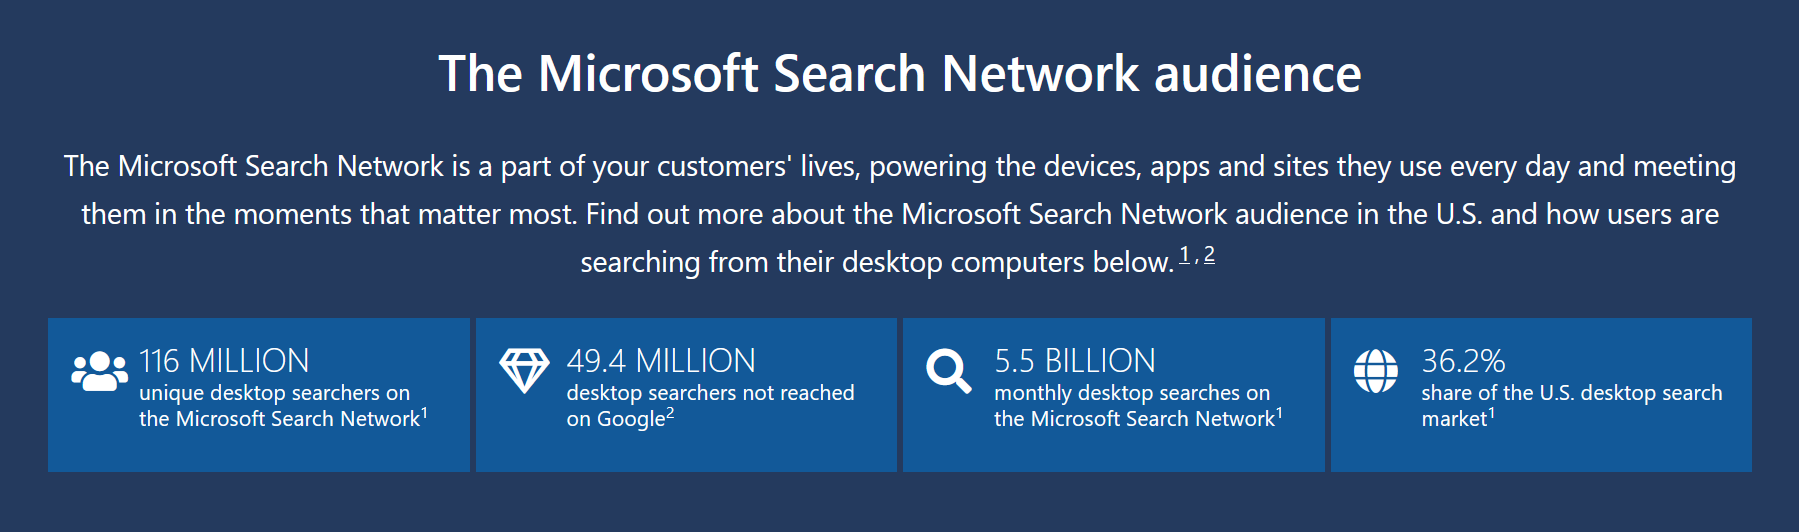 Microsoft Search Network